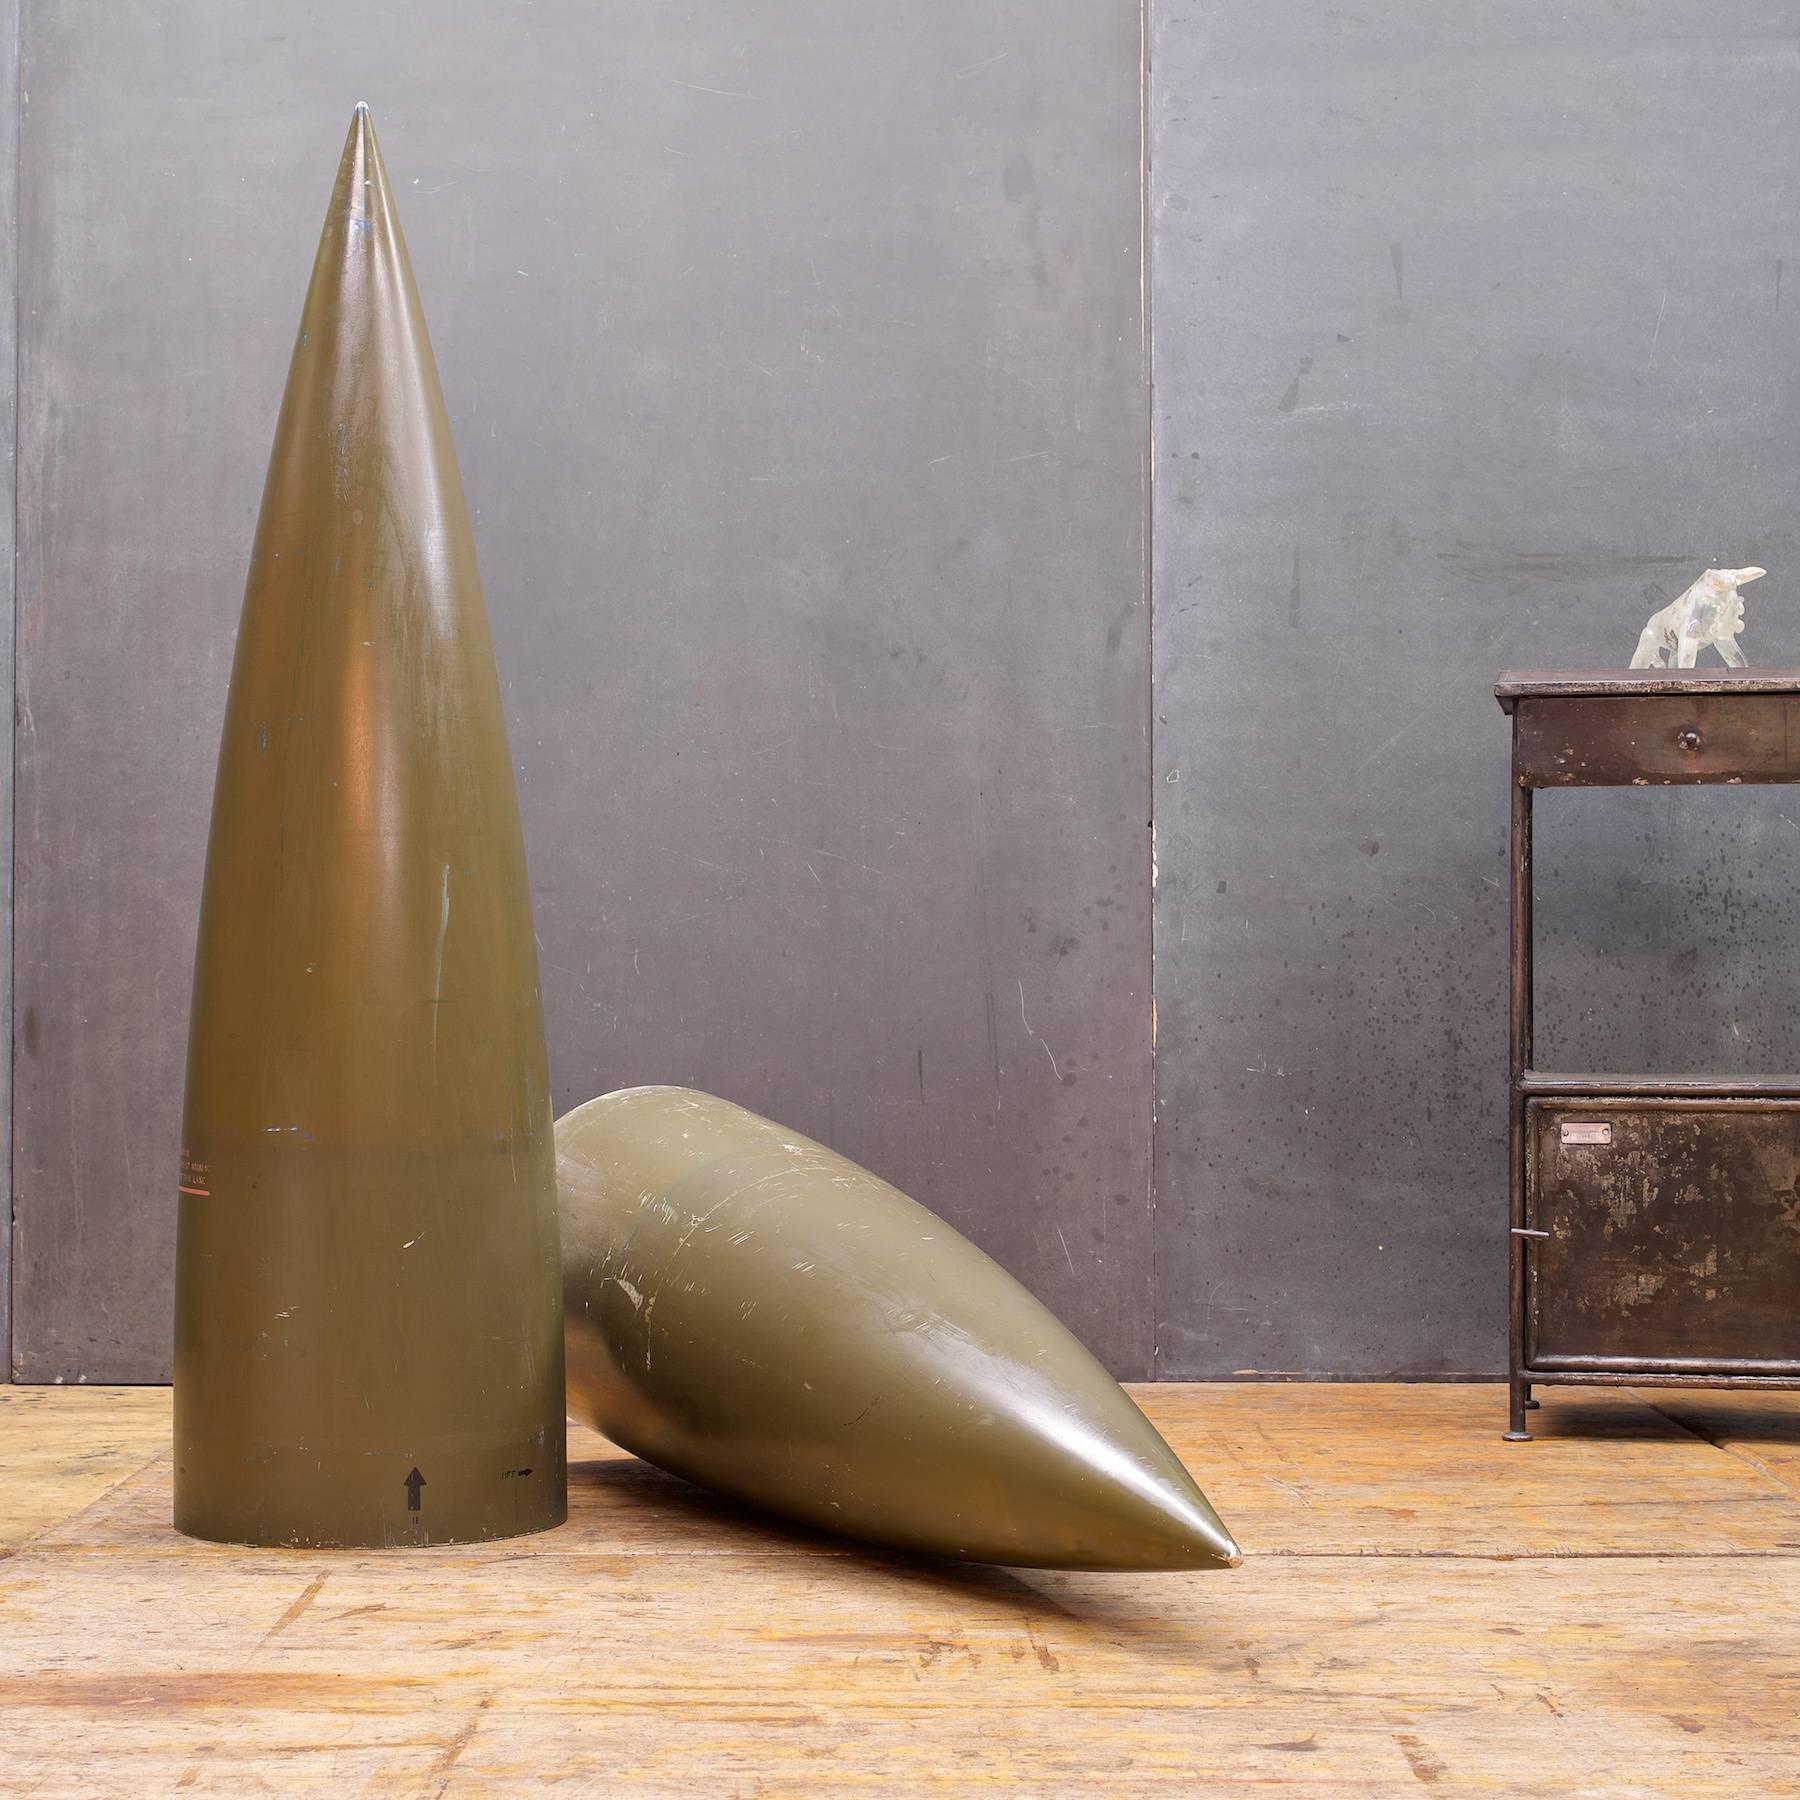 Post-Modern Vietnam Era Military Fiberglass Rocket Jet Plane Nose Cone Sculpture